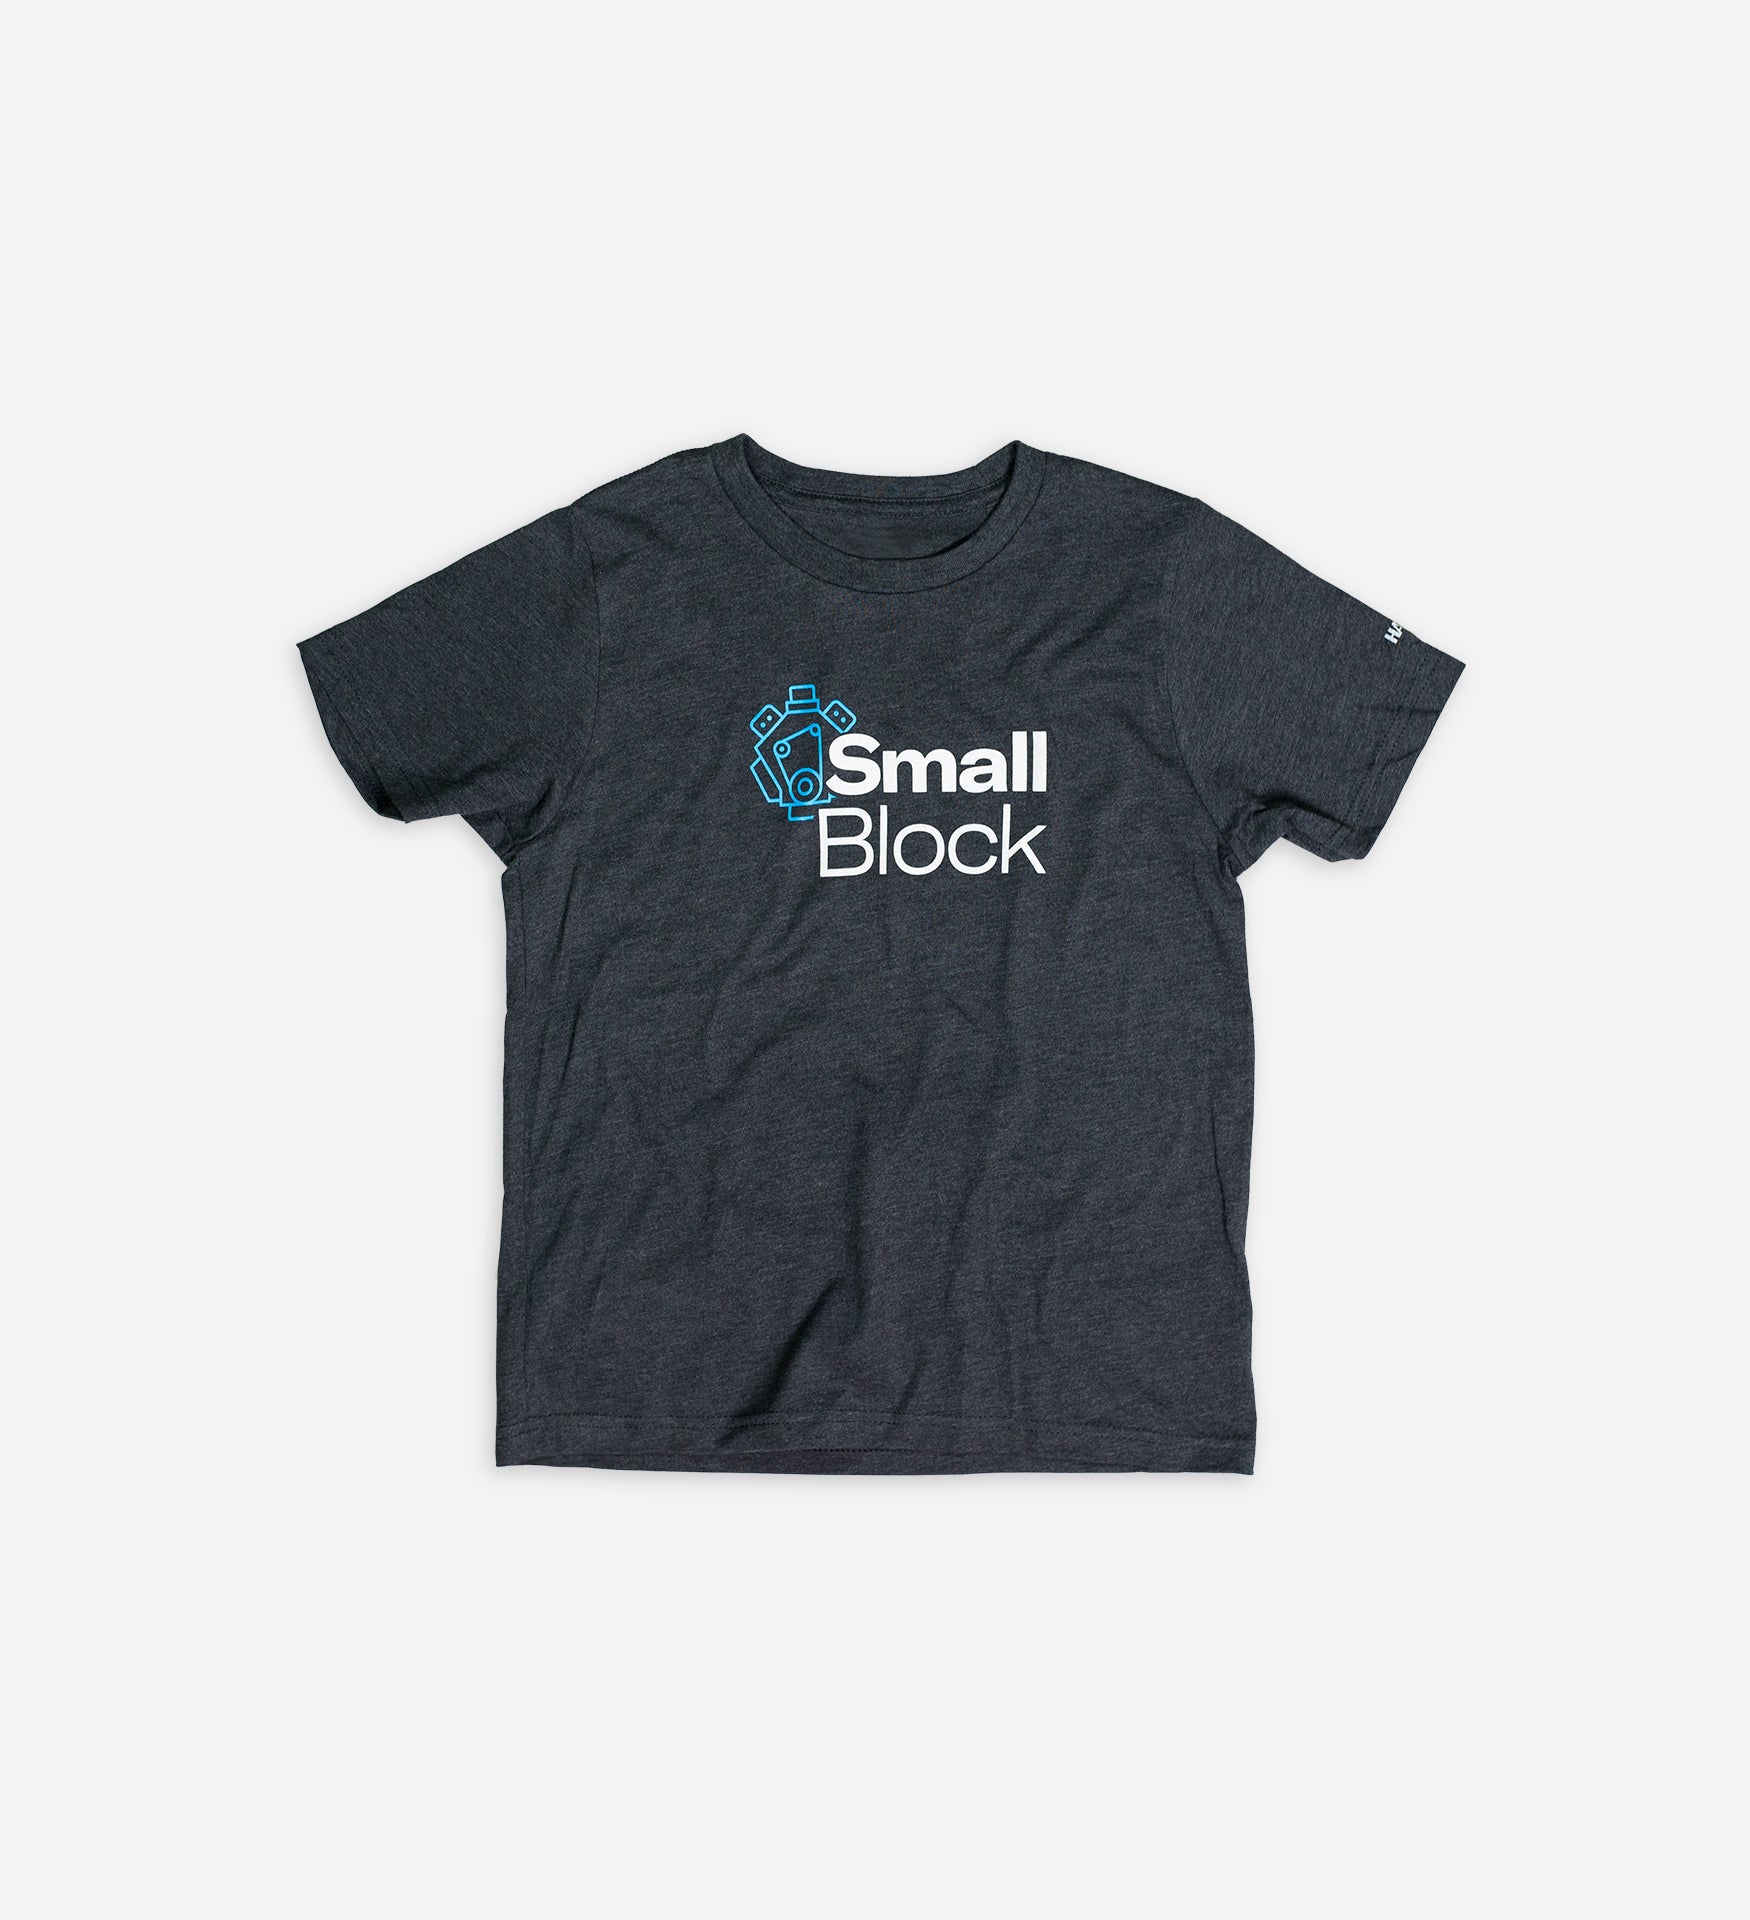 Small Block Youth T-shirt